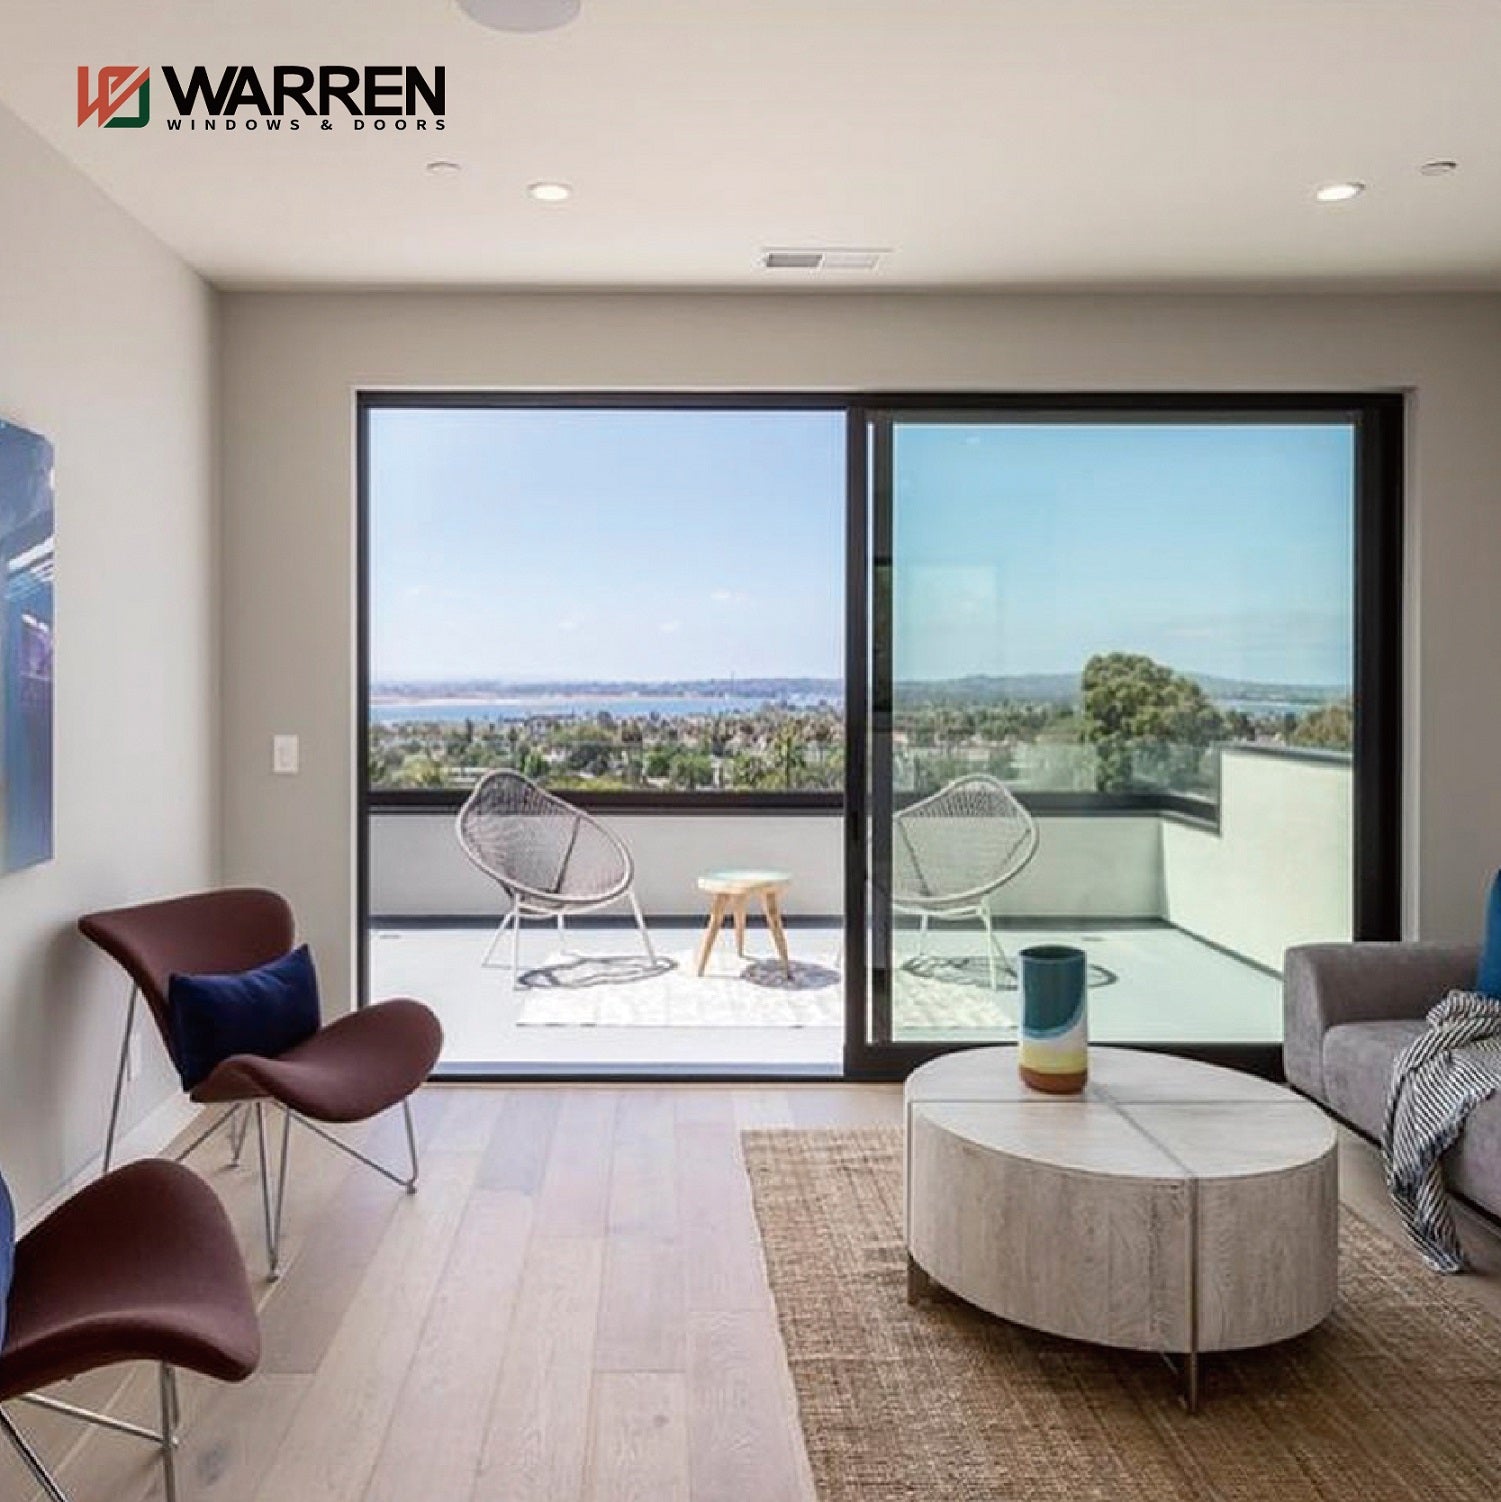 Warren New Model Customized Large Sliding Aluminium Door Lift And Slide Door For Commercial Residential Villa